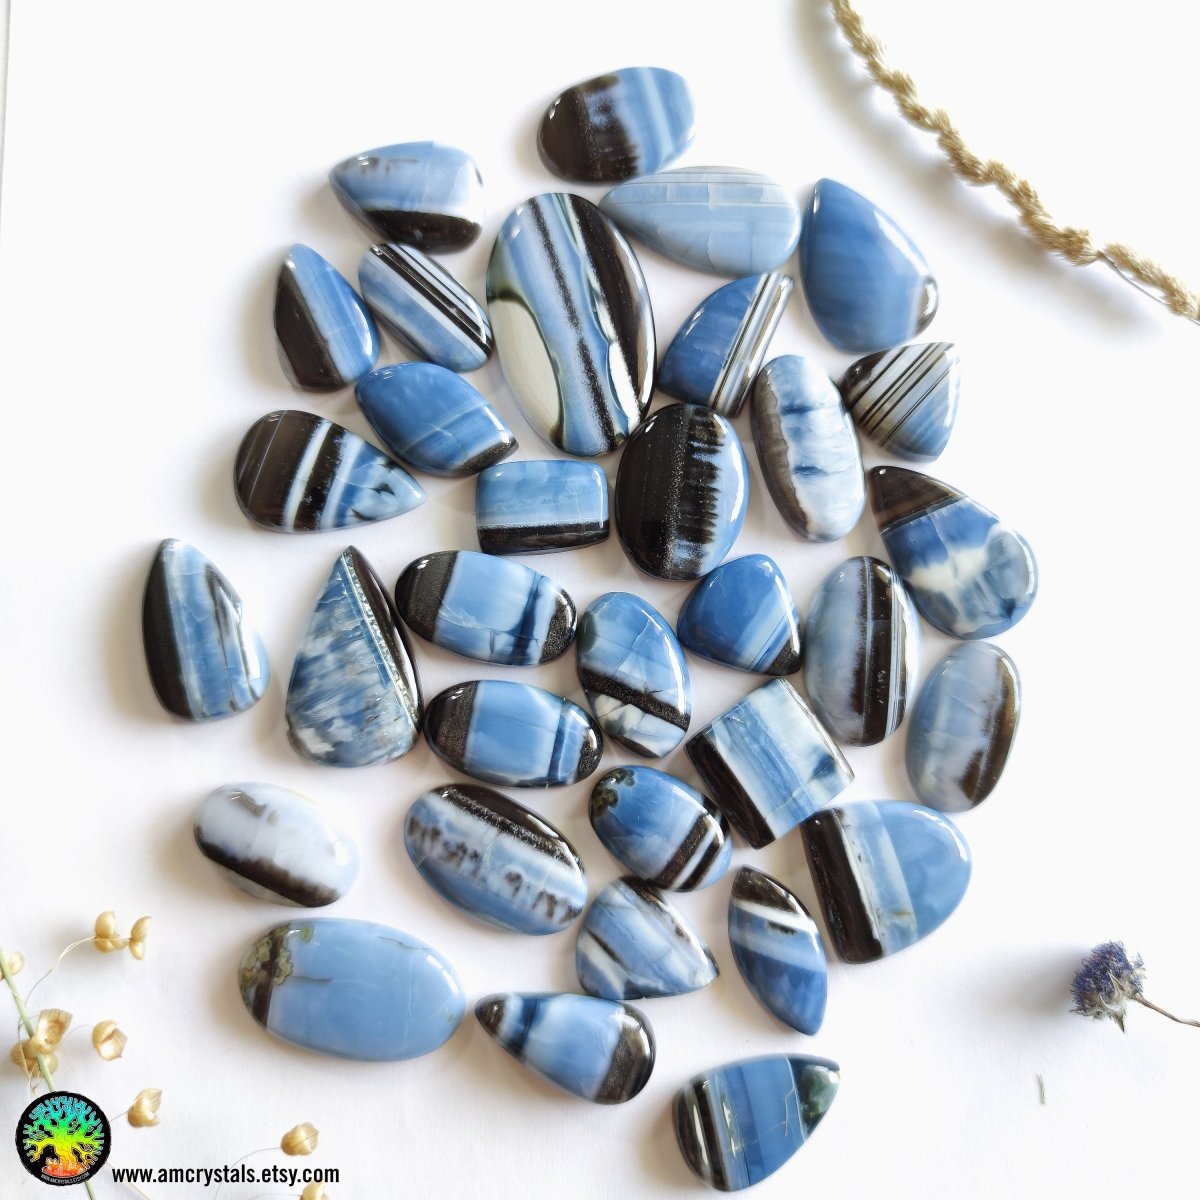 Owyhee Blue Opal Mix Shapes Gemstones - Anima Mundi Crystals